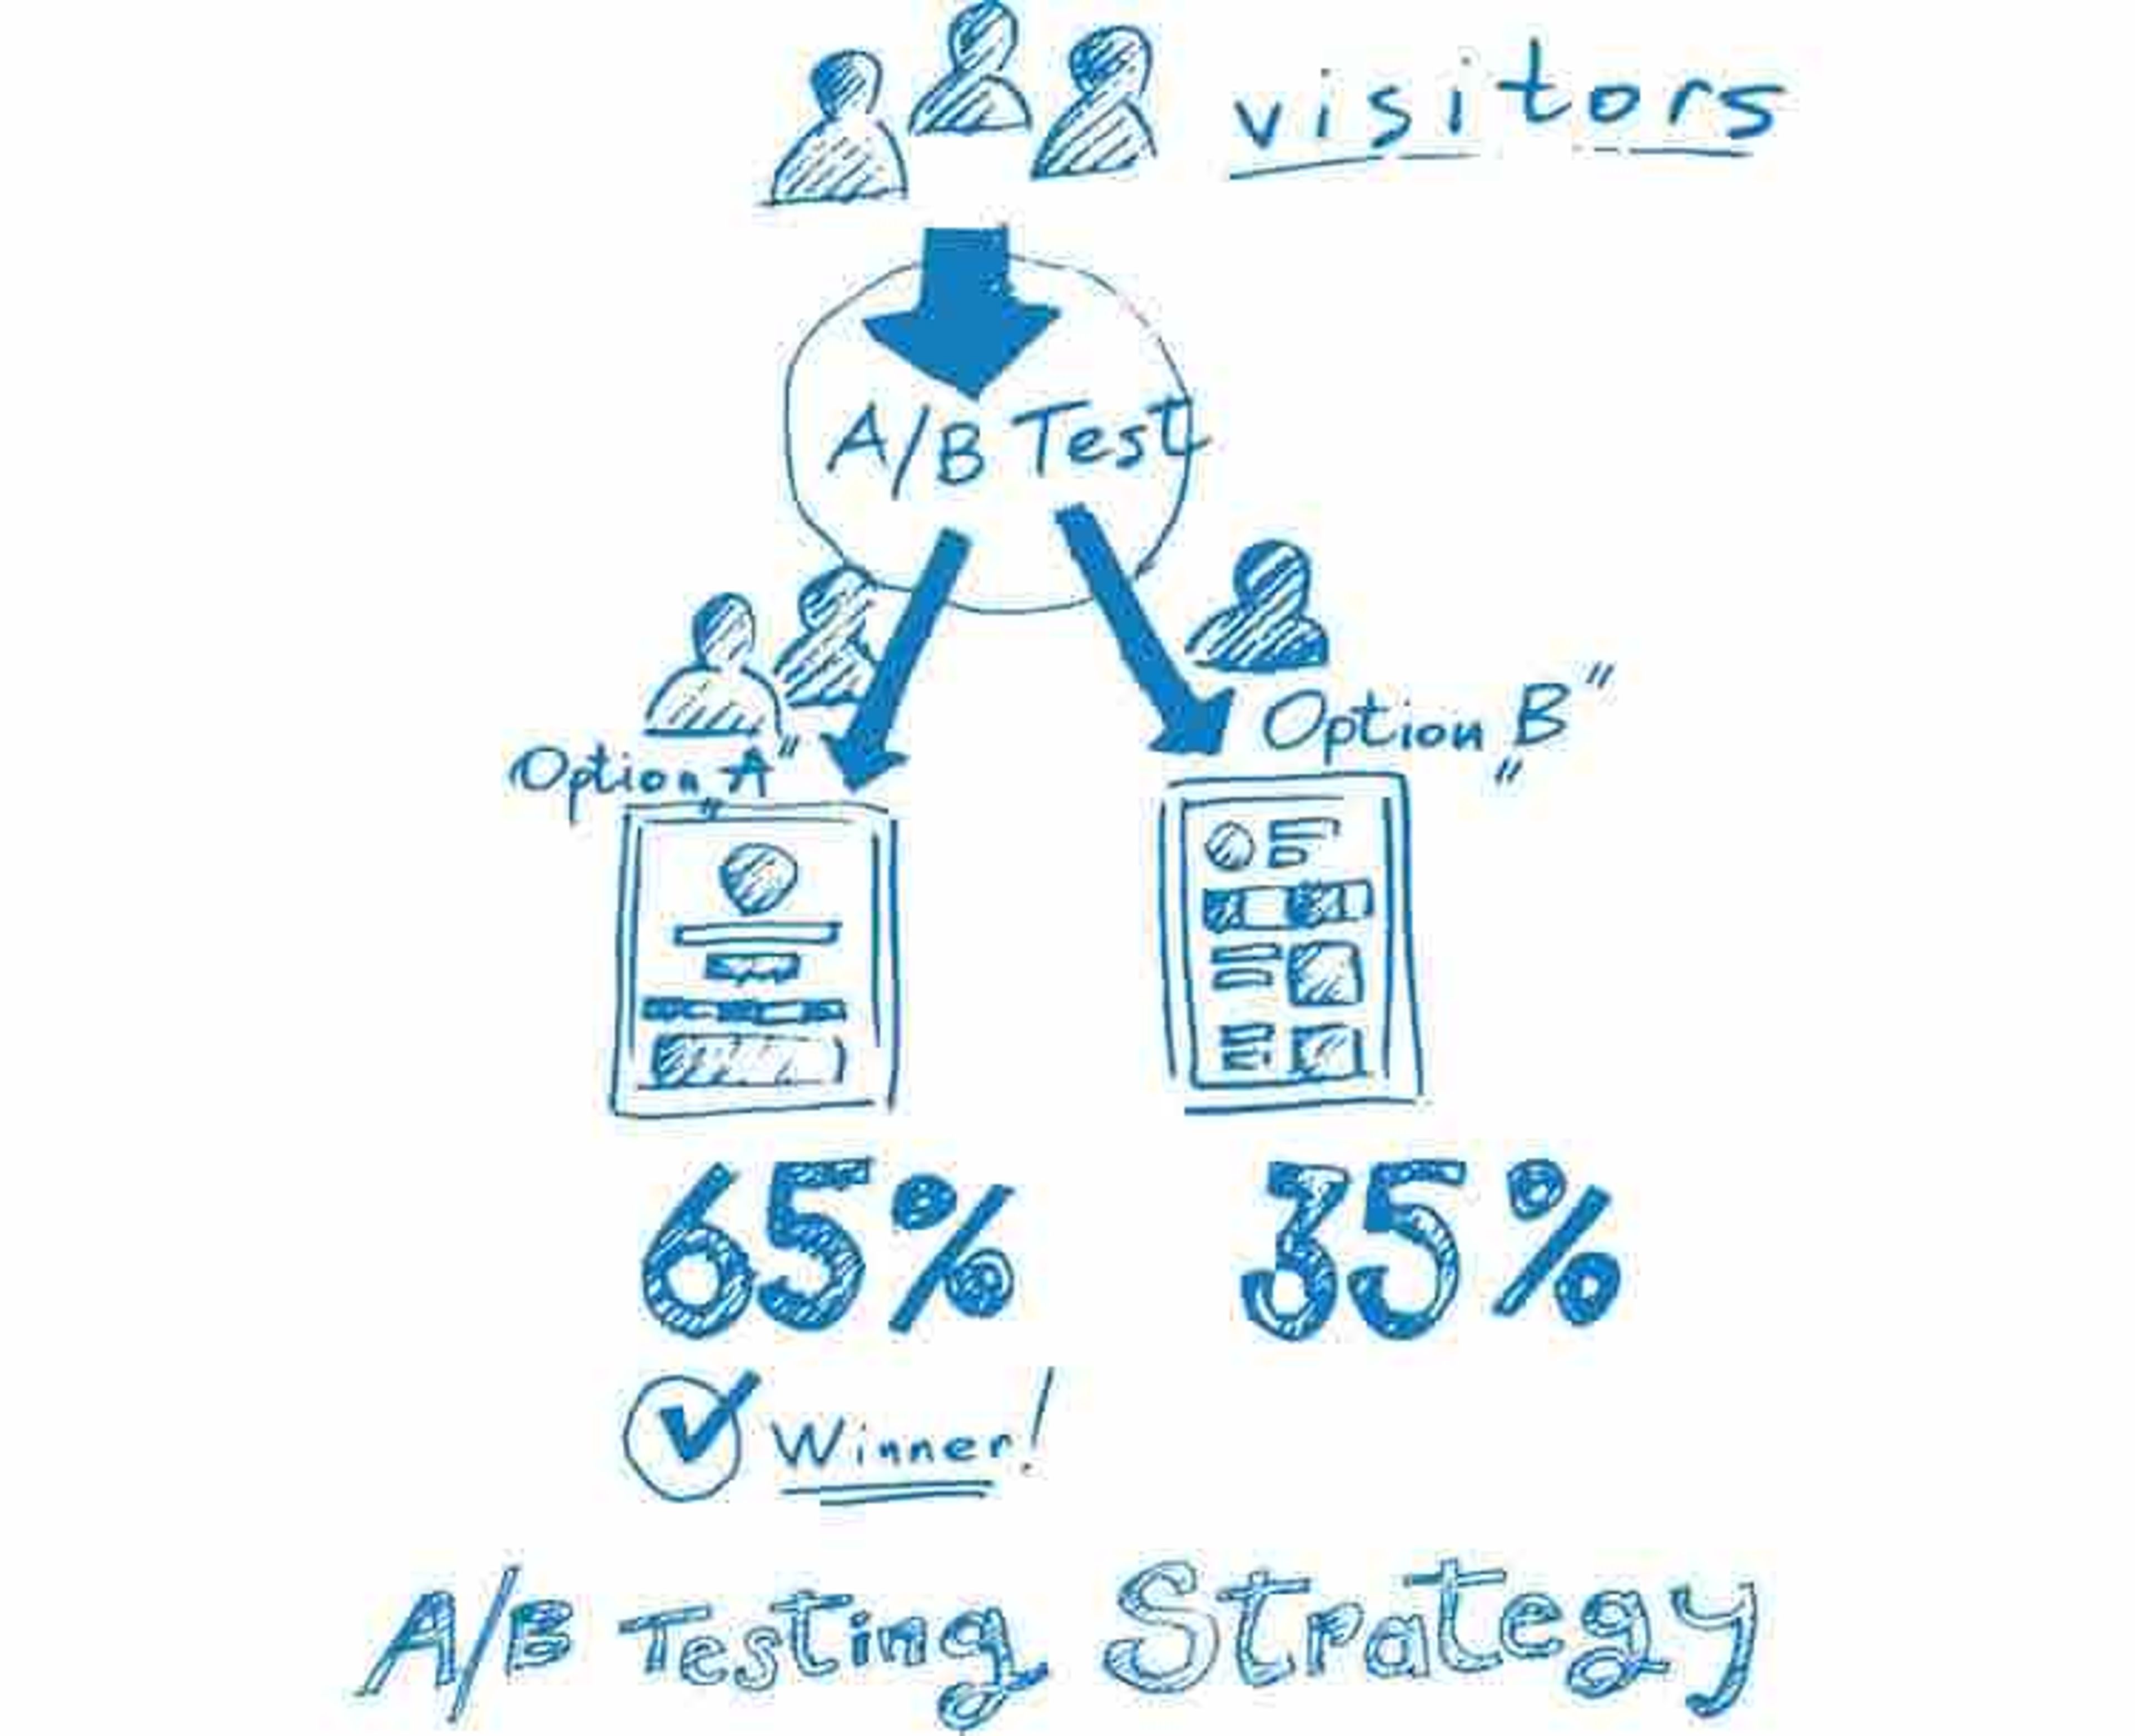 A/B testing strategy diagram